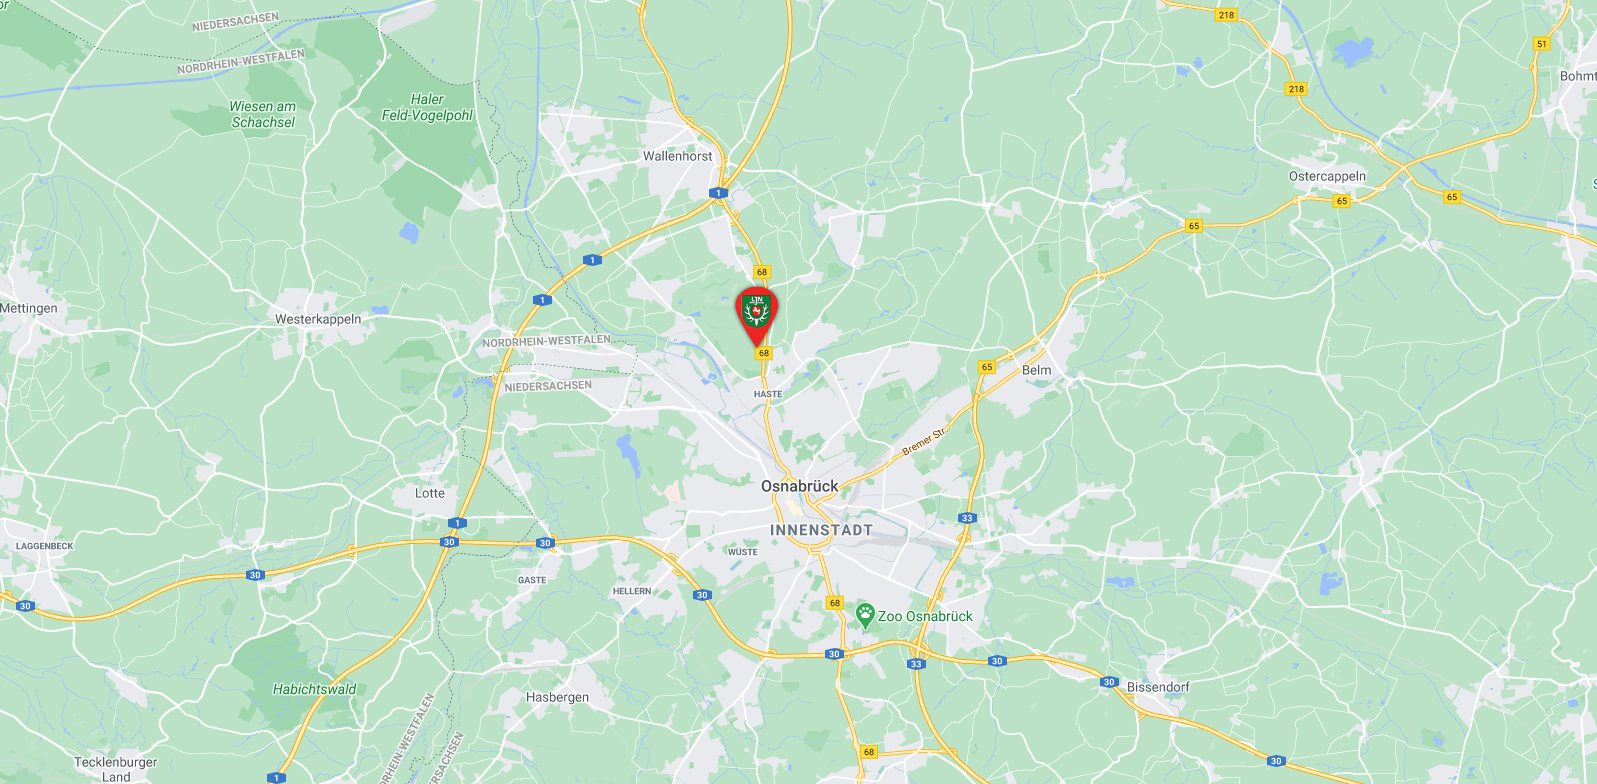 Lage der Jagdschule Osnabrück auf Google Maps